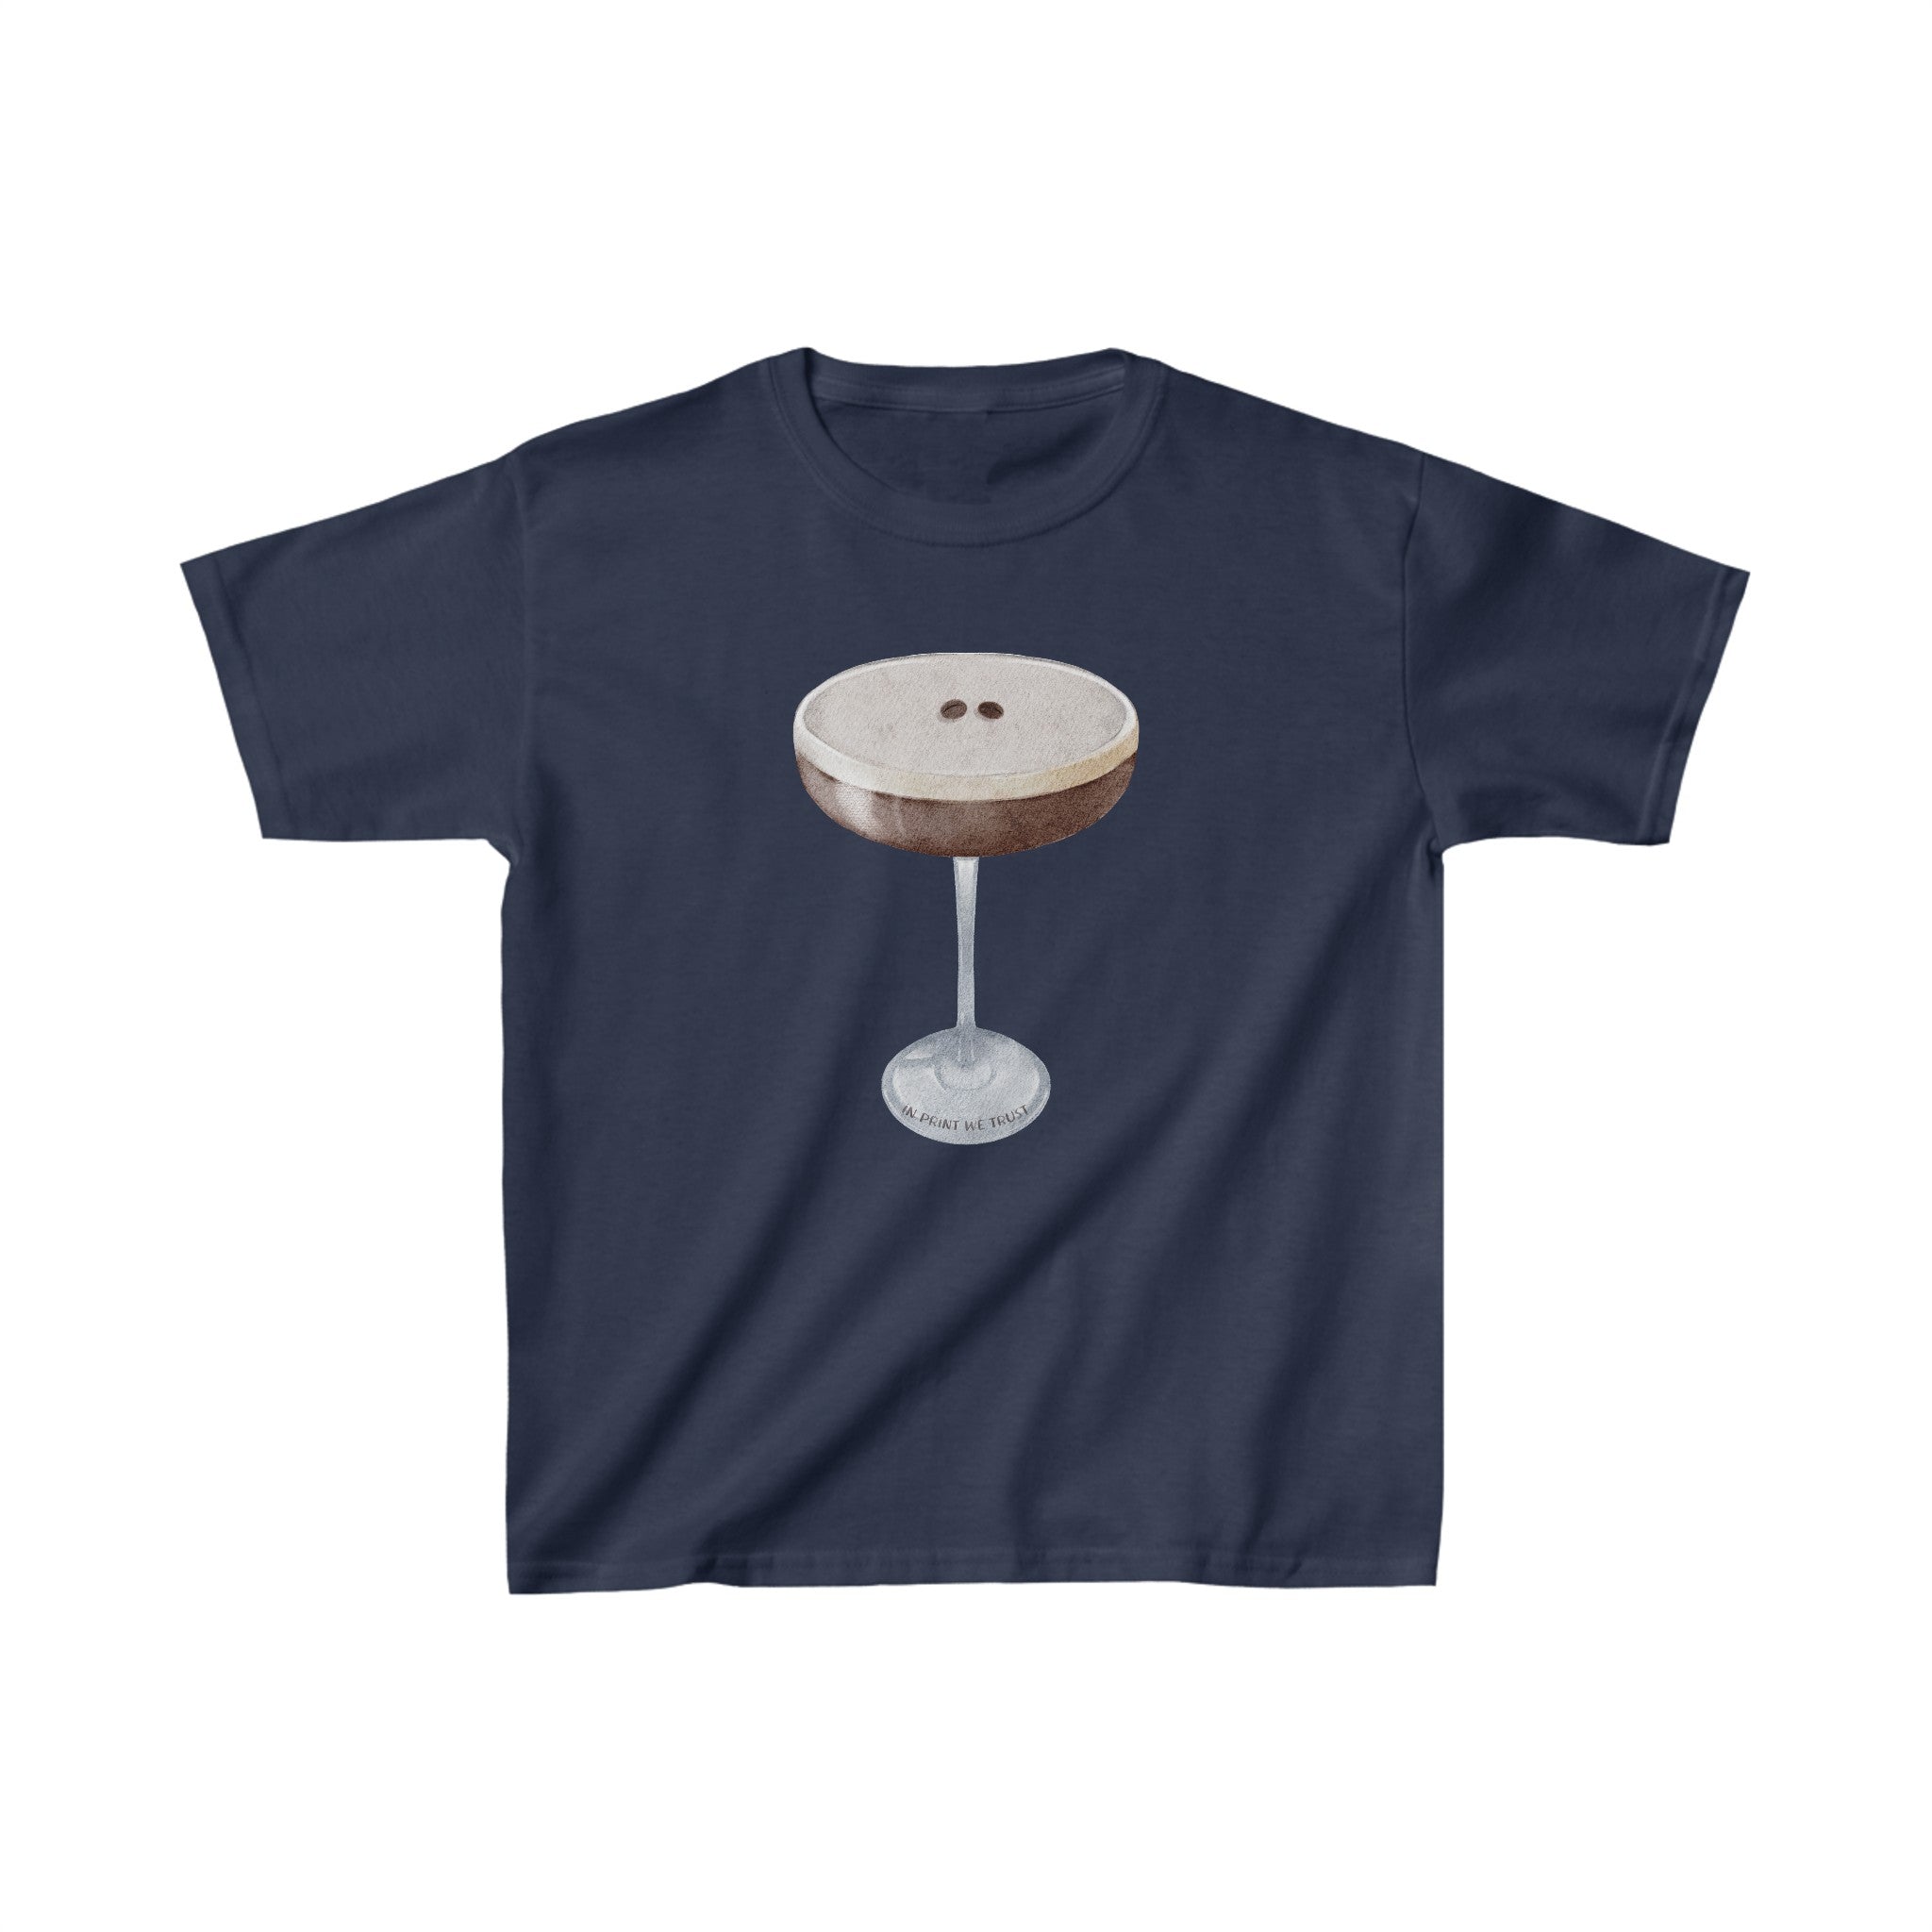 'Espresso Martini' baby tee - In Print We Trust